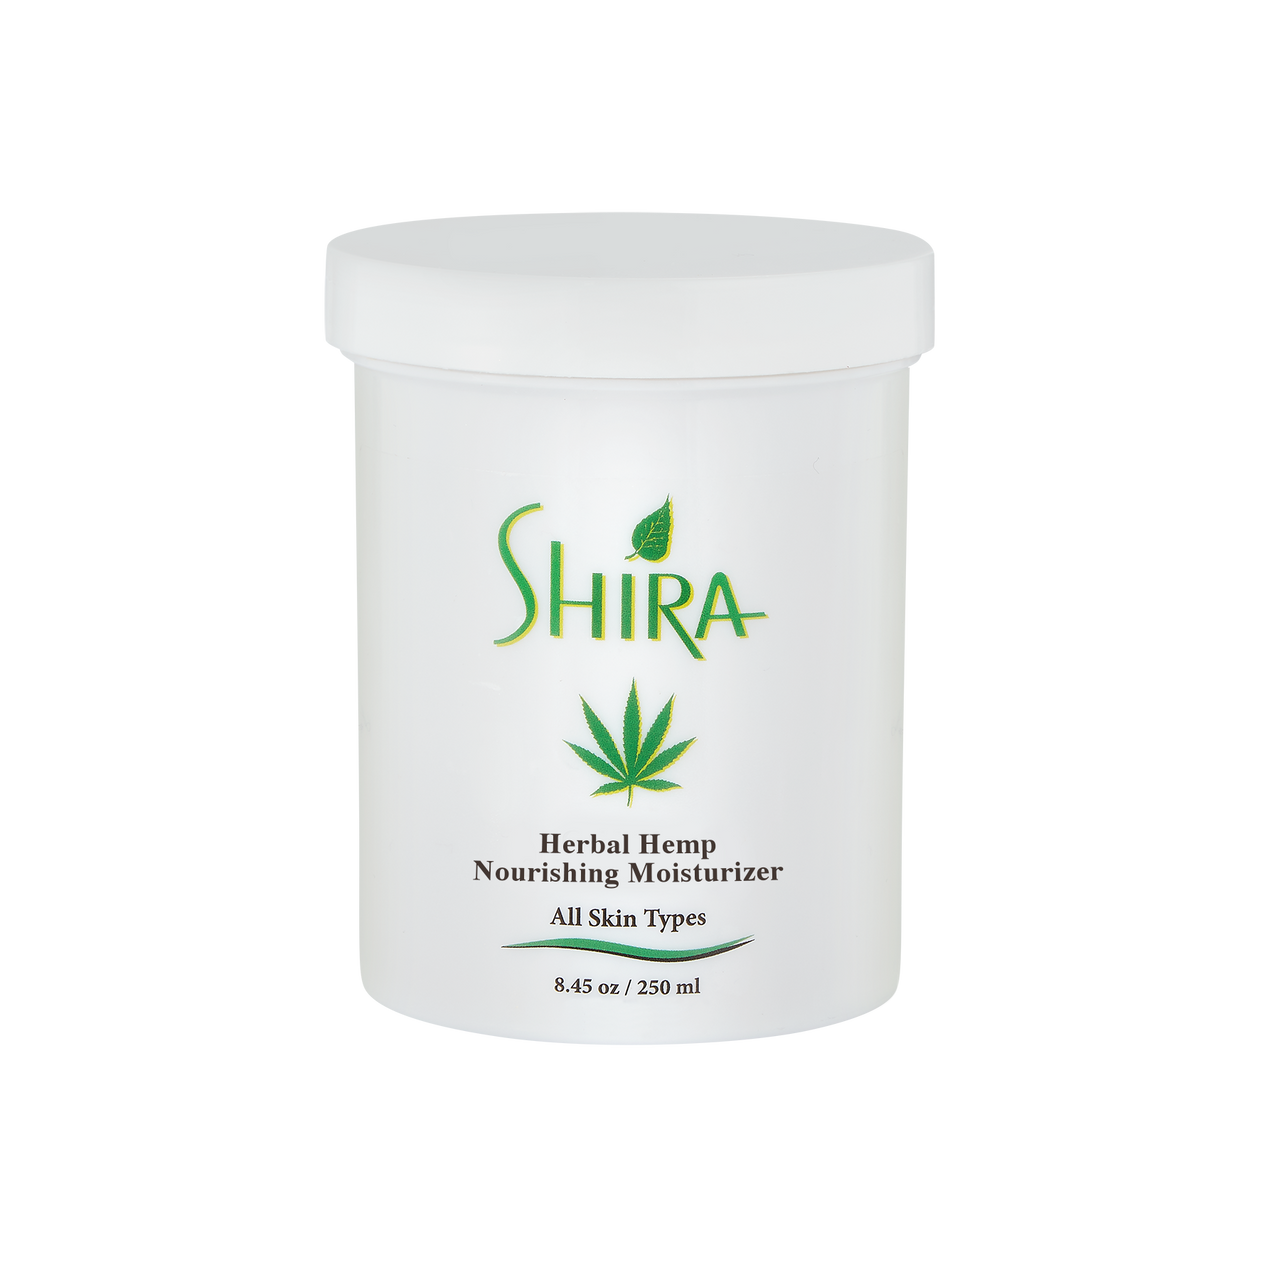 Shira Hemp Herbal Nourishing Moisturizer PROFESSIONAL SIZE